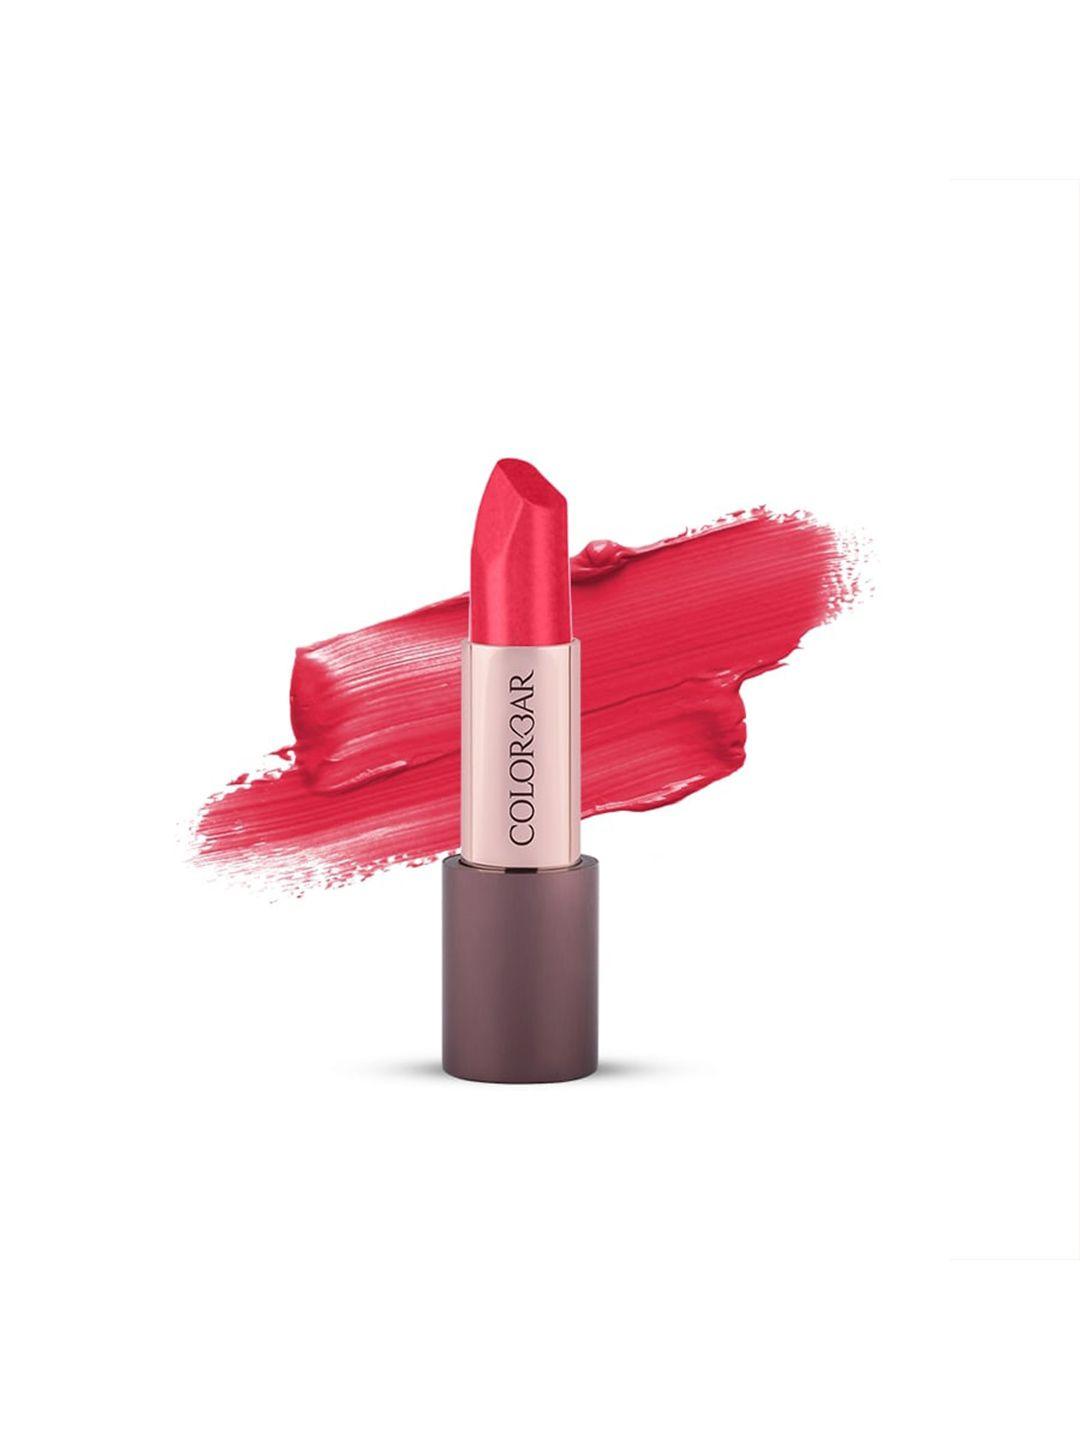 colorbar conscious matte lipstick with vitamin e & jojoba oil 4.2 g - peace 002